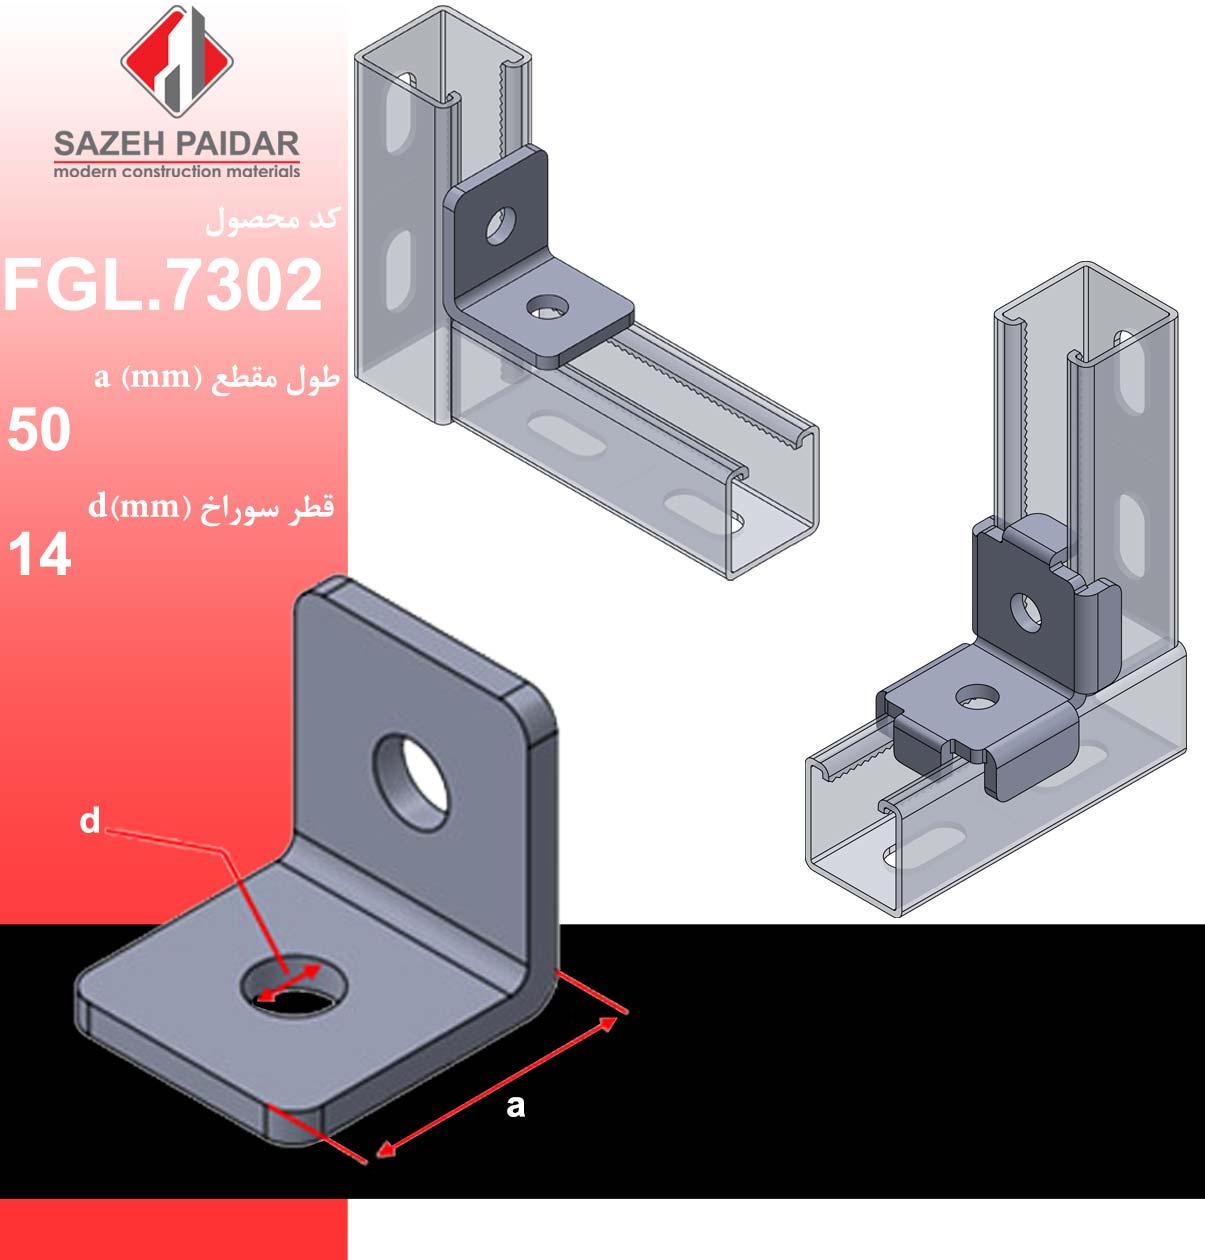 نبشی ساده دو سوراخ FGL.7302 سازه پایدار الهیه (گروه صنعتی لینکران)